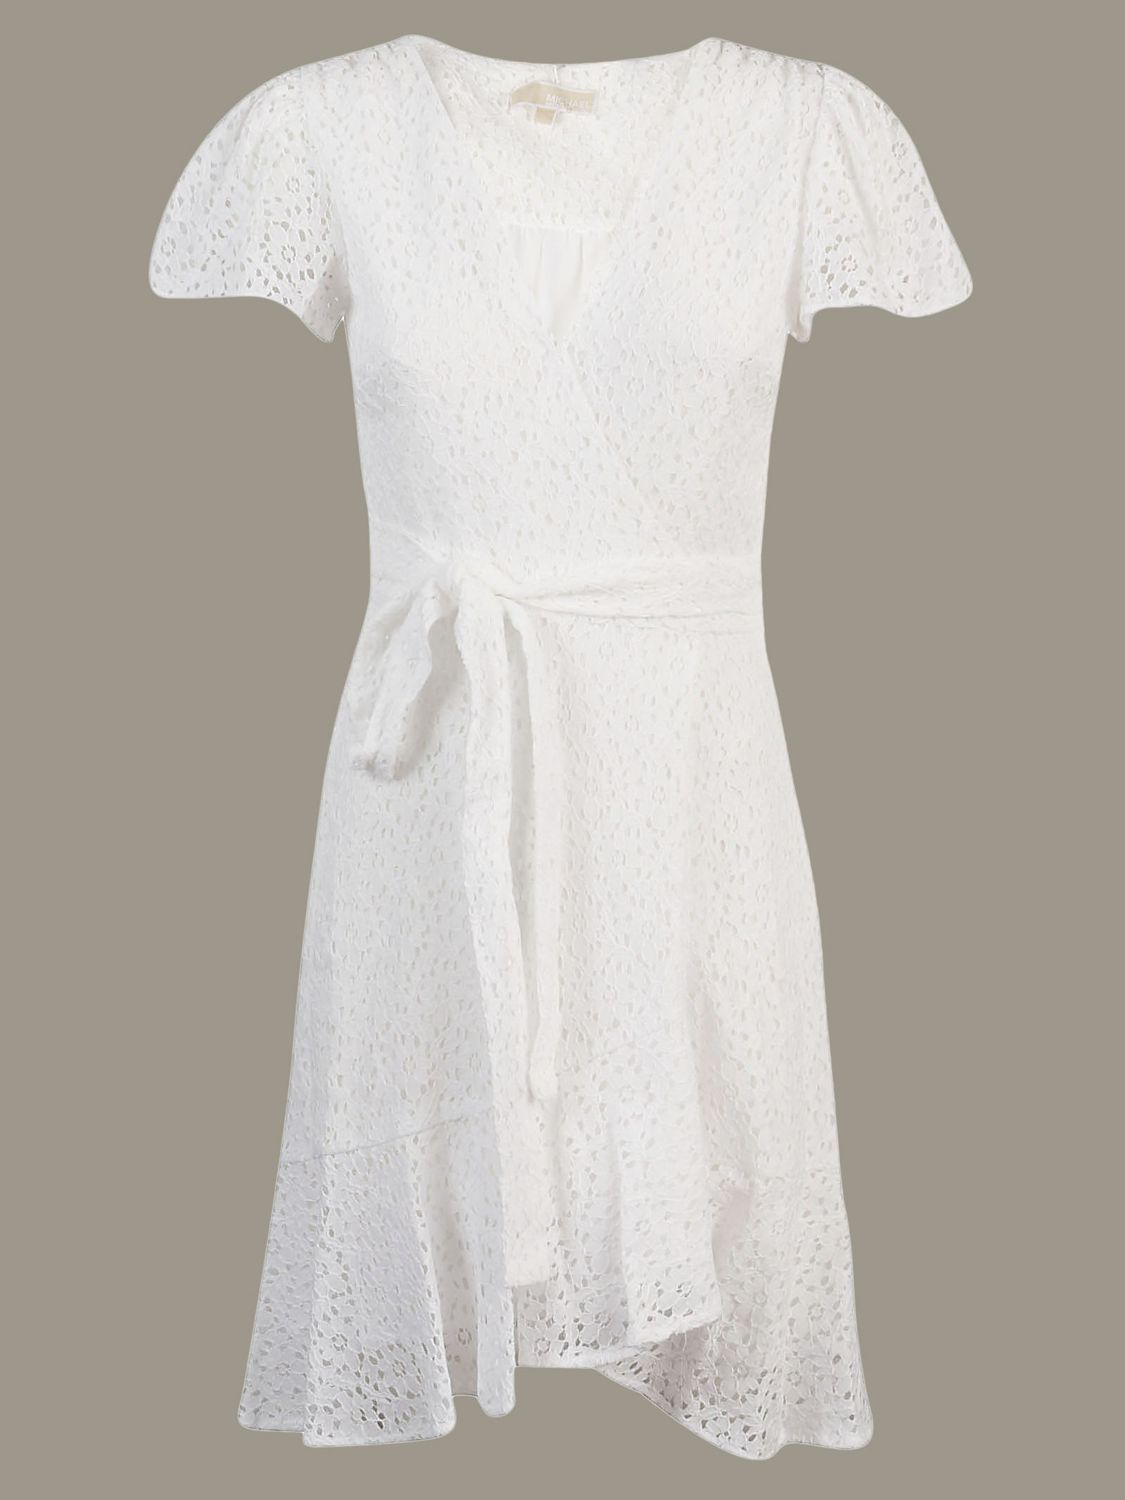 white dress michael kors